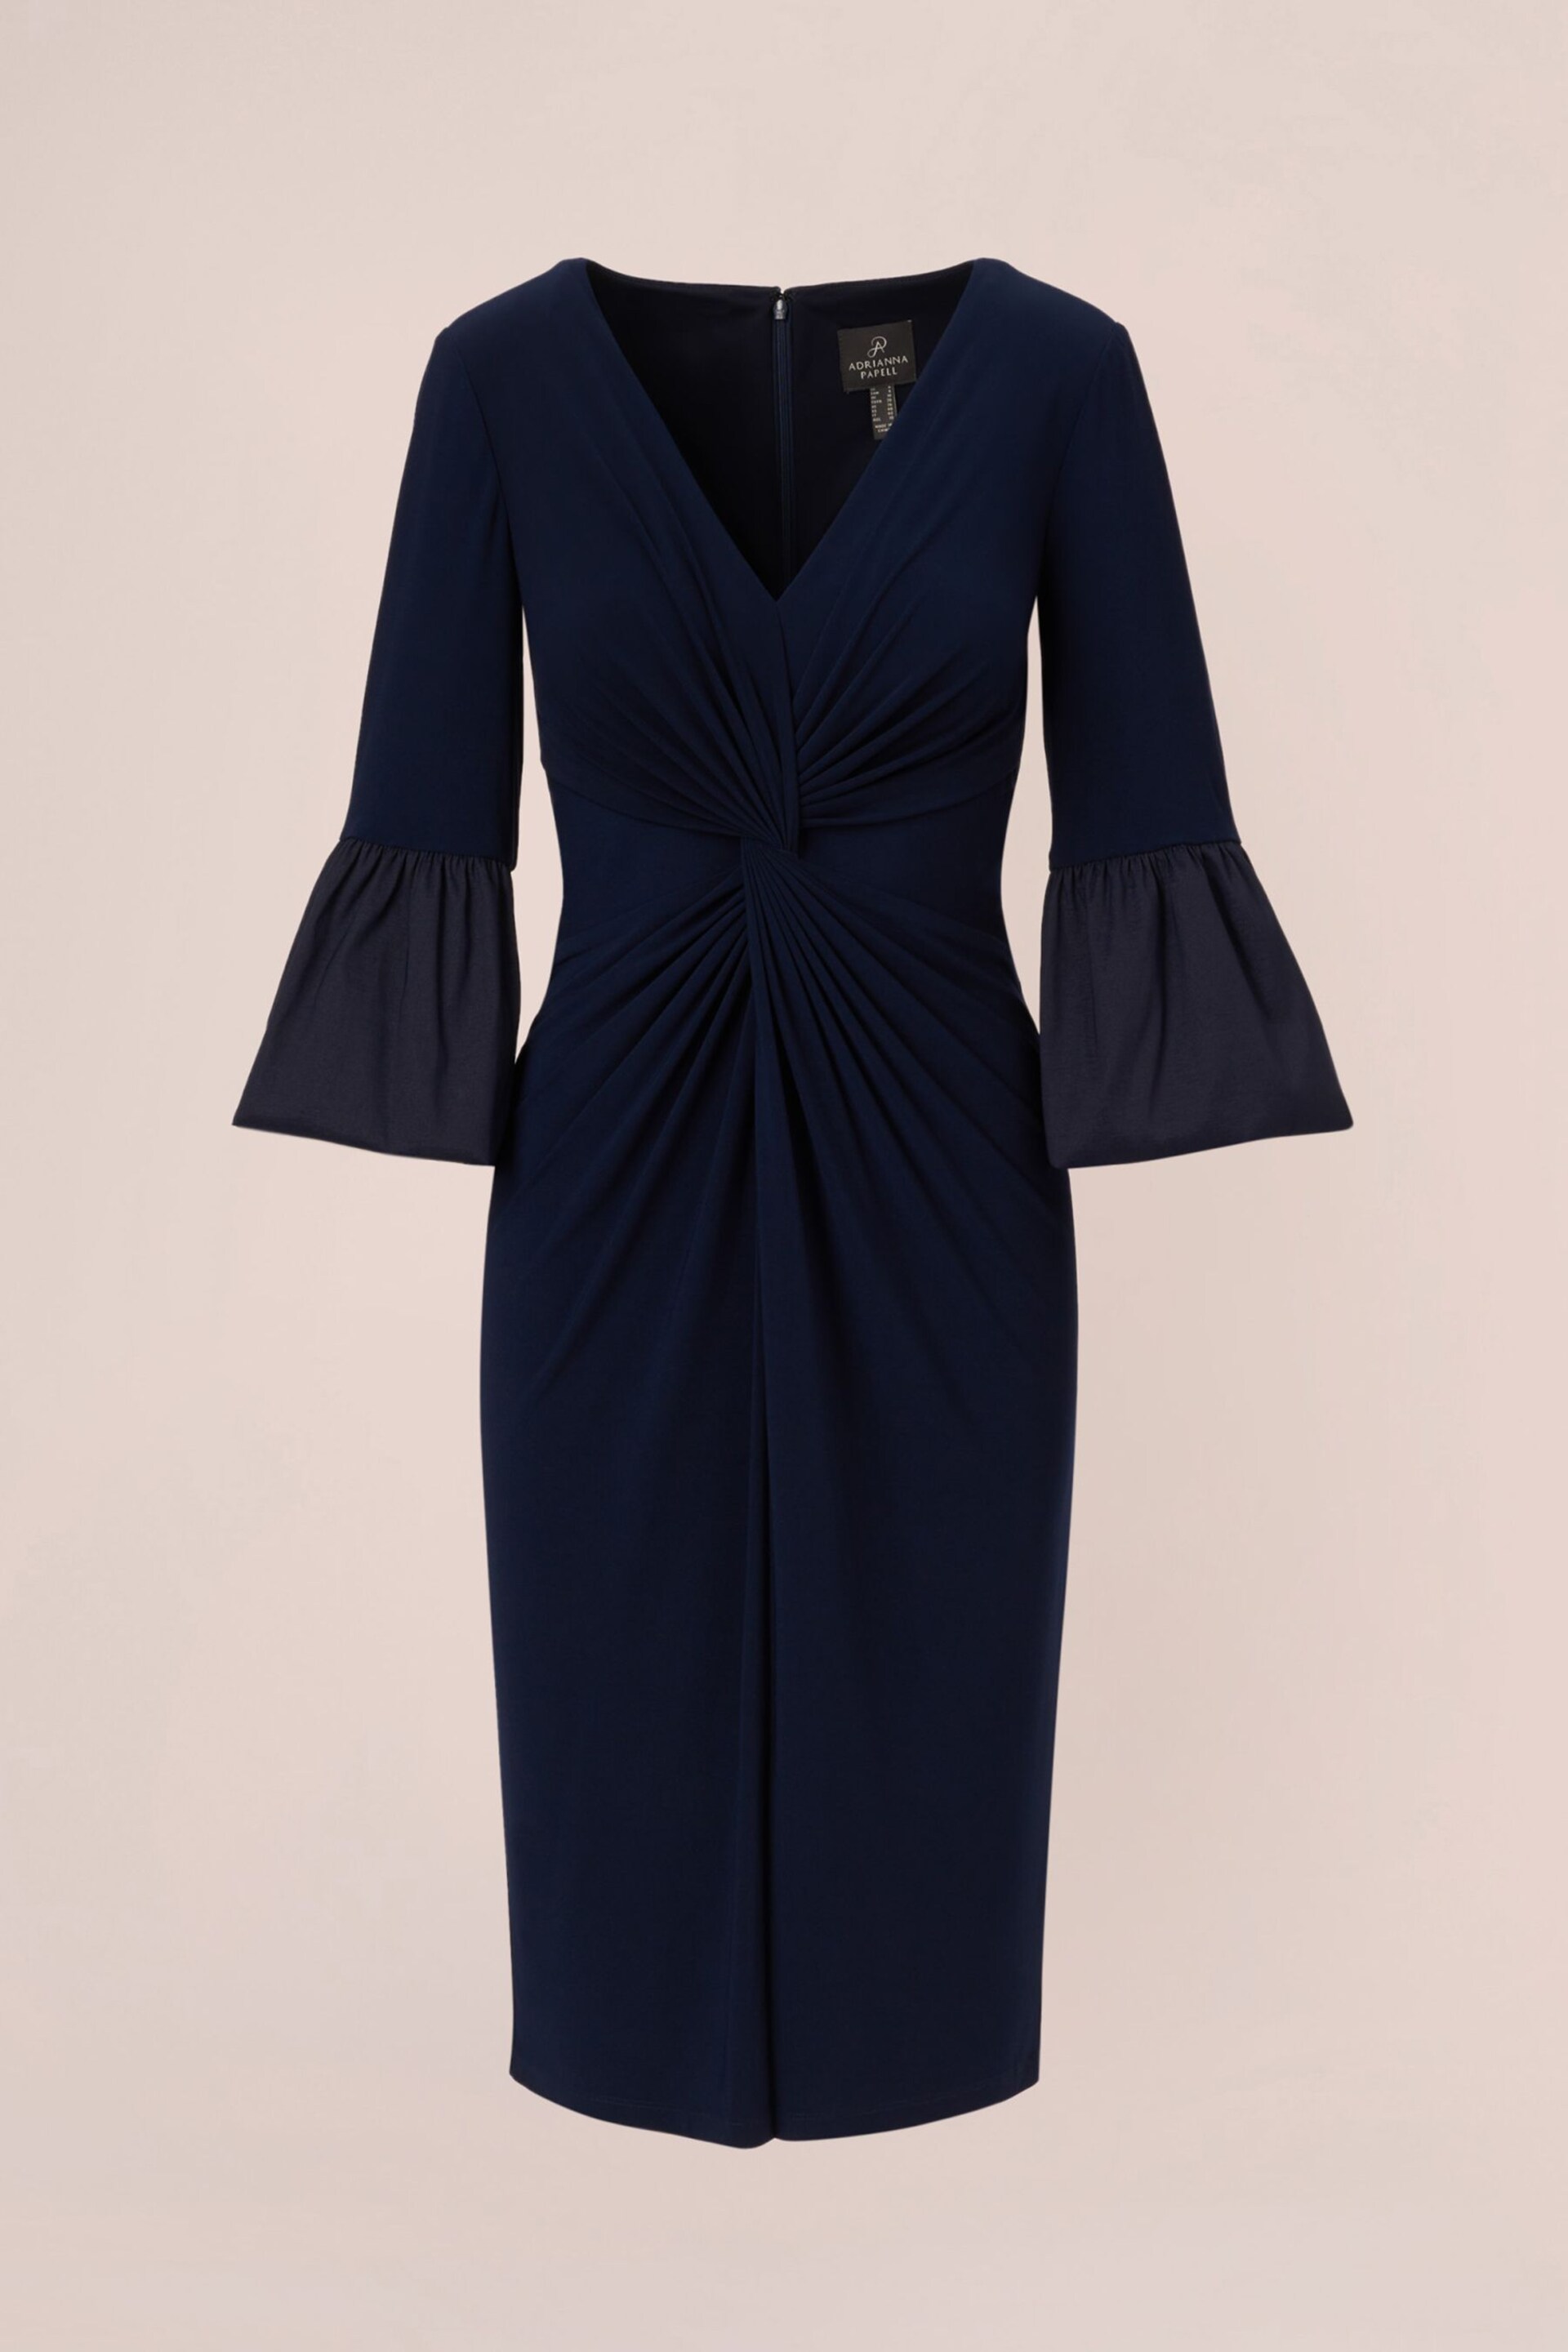 Adrianna Papell Blue Jersey And Taffeta Midi Dress - Image 6 of 7